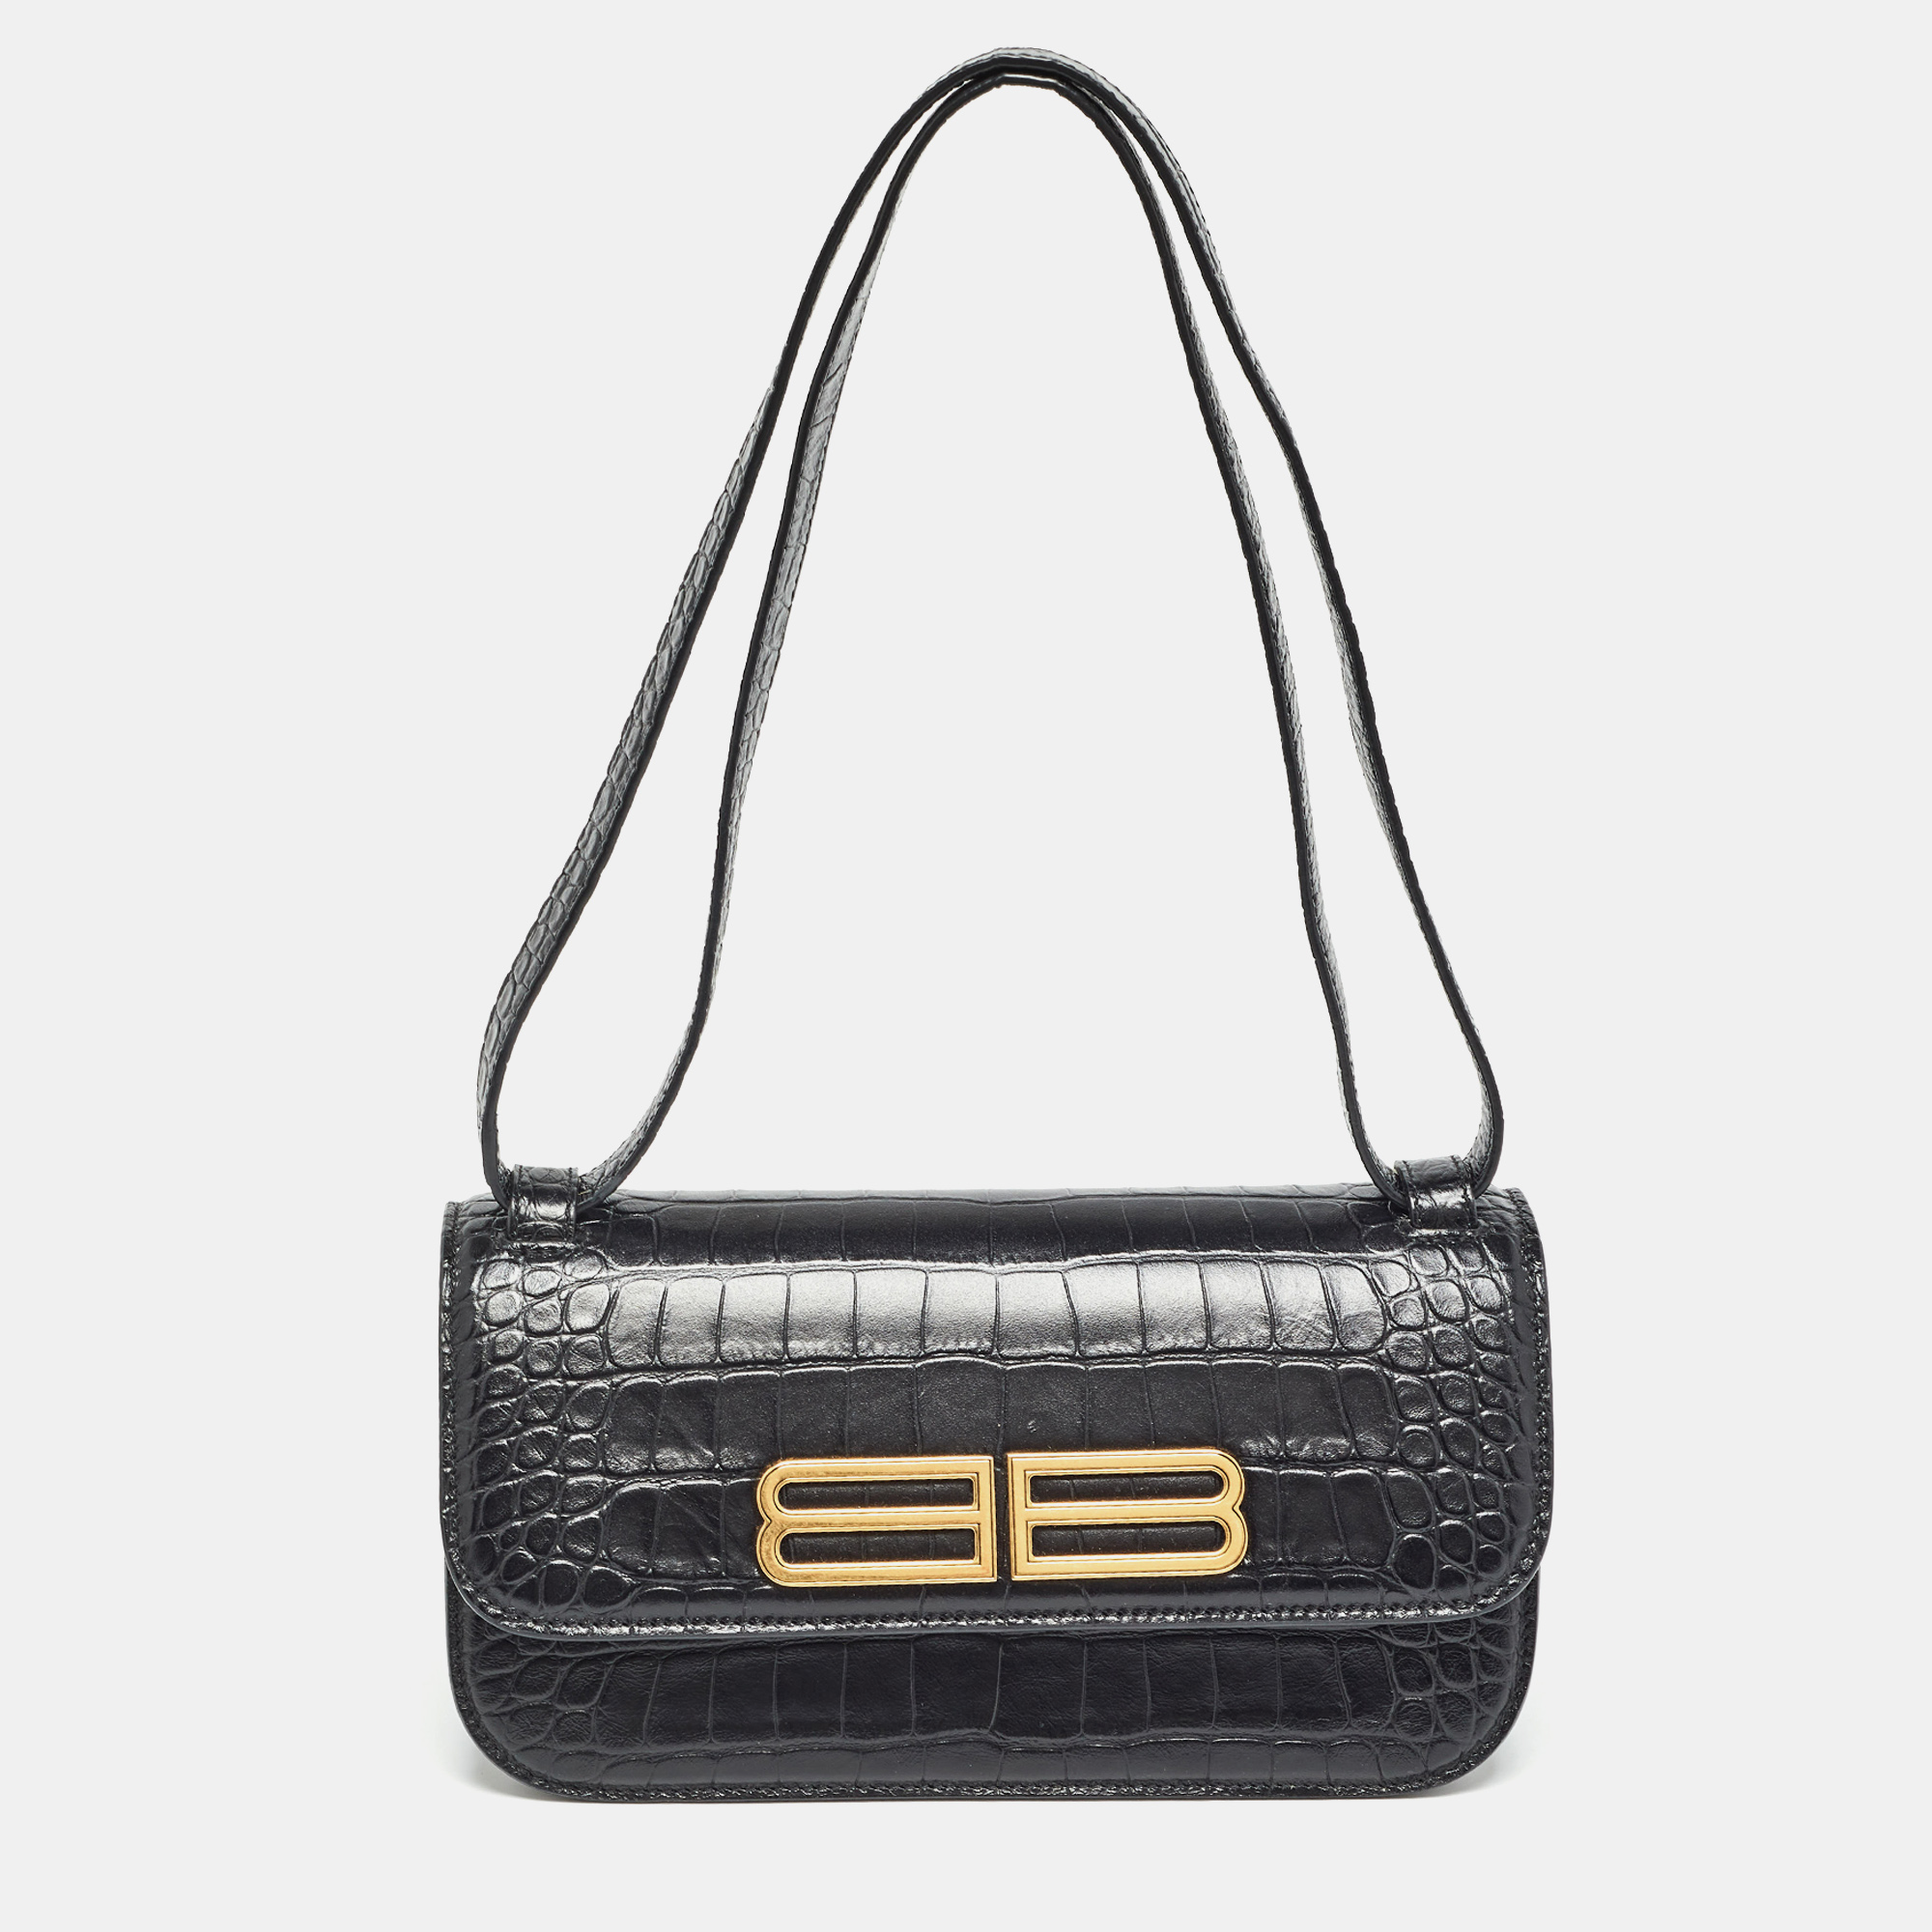 Balenciaga black croc embossed leather small gossip shoulder bag